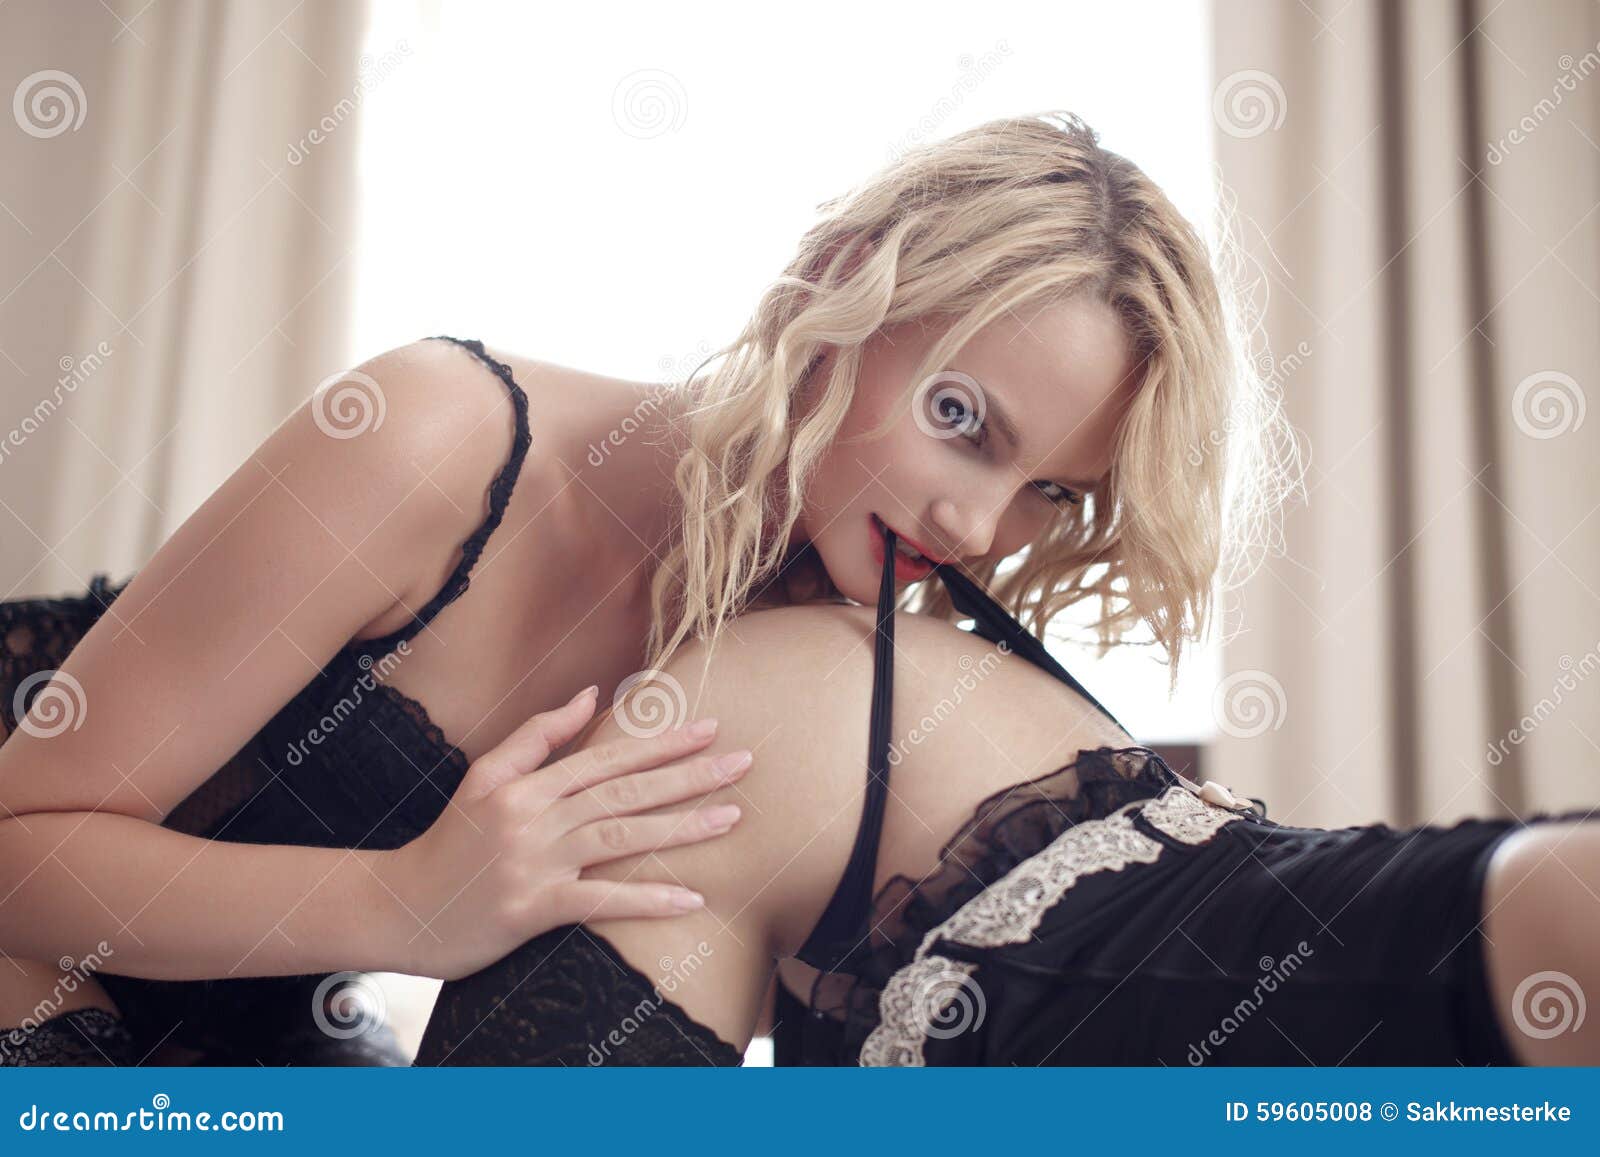 https://thumbs.dreamstime.com/z/sexy-blonde-woman-bite-lovers-panties-women-lesbian-foreplay-59605008.jpg